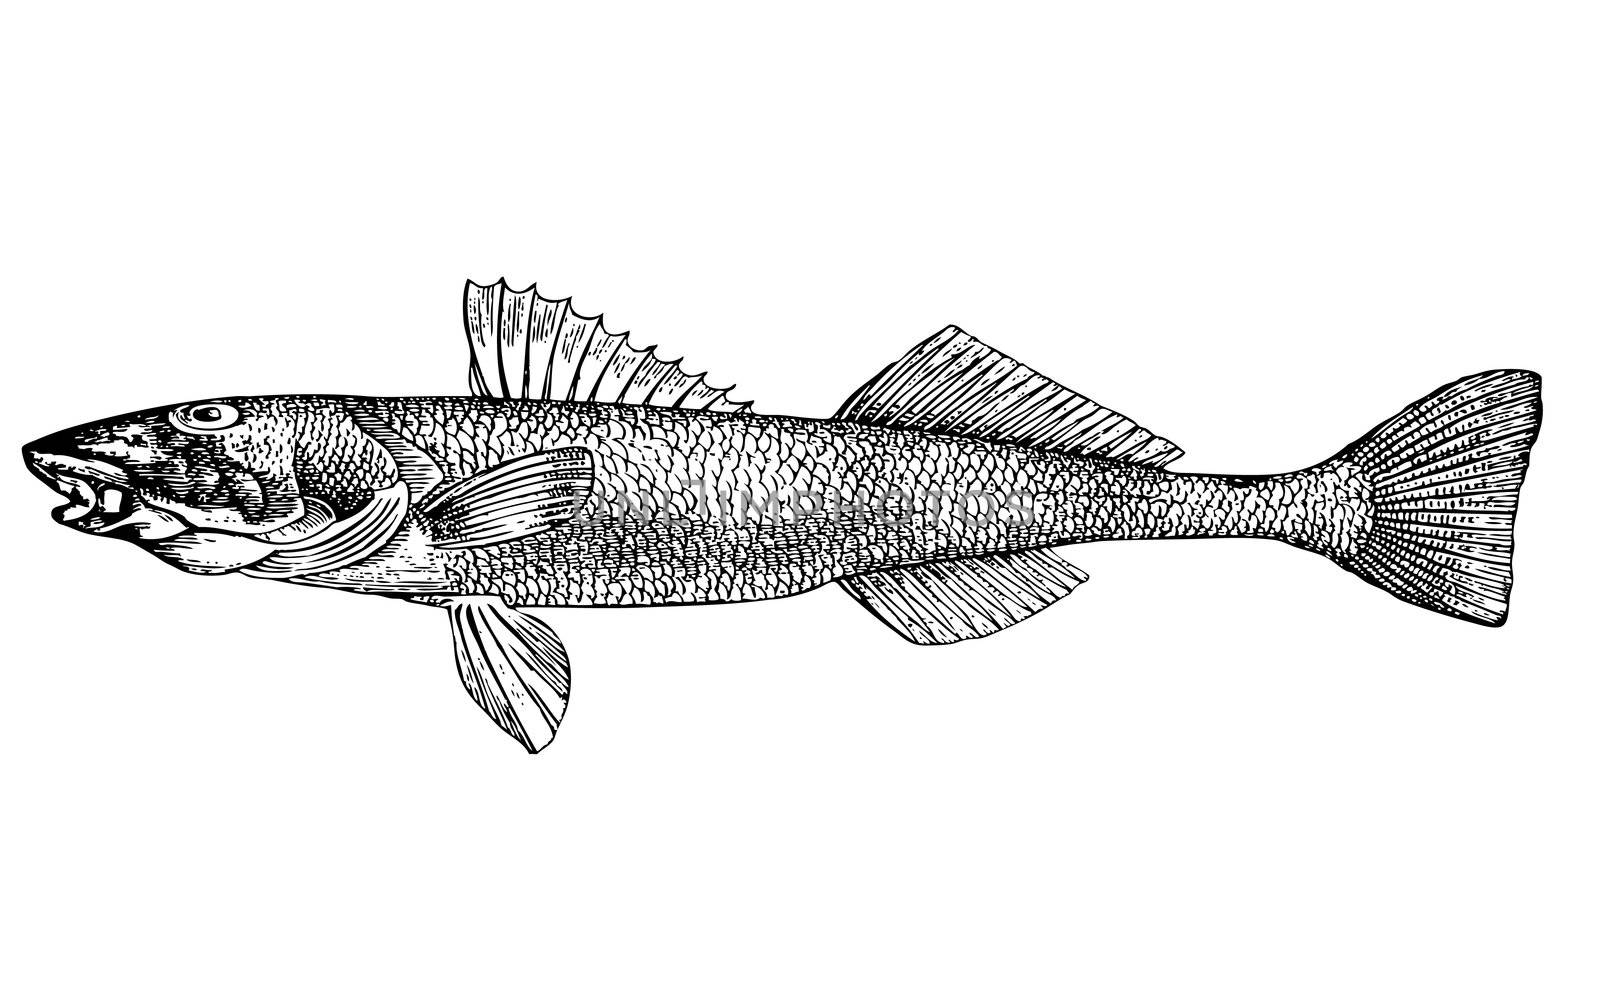 Fish Aspro zingel (latin) Illustration. by selhin